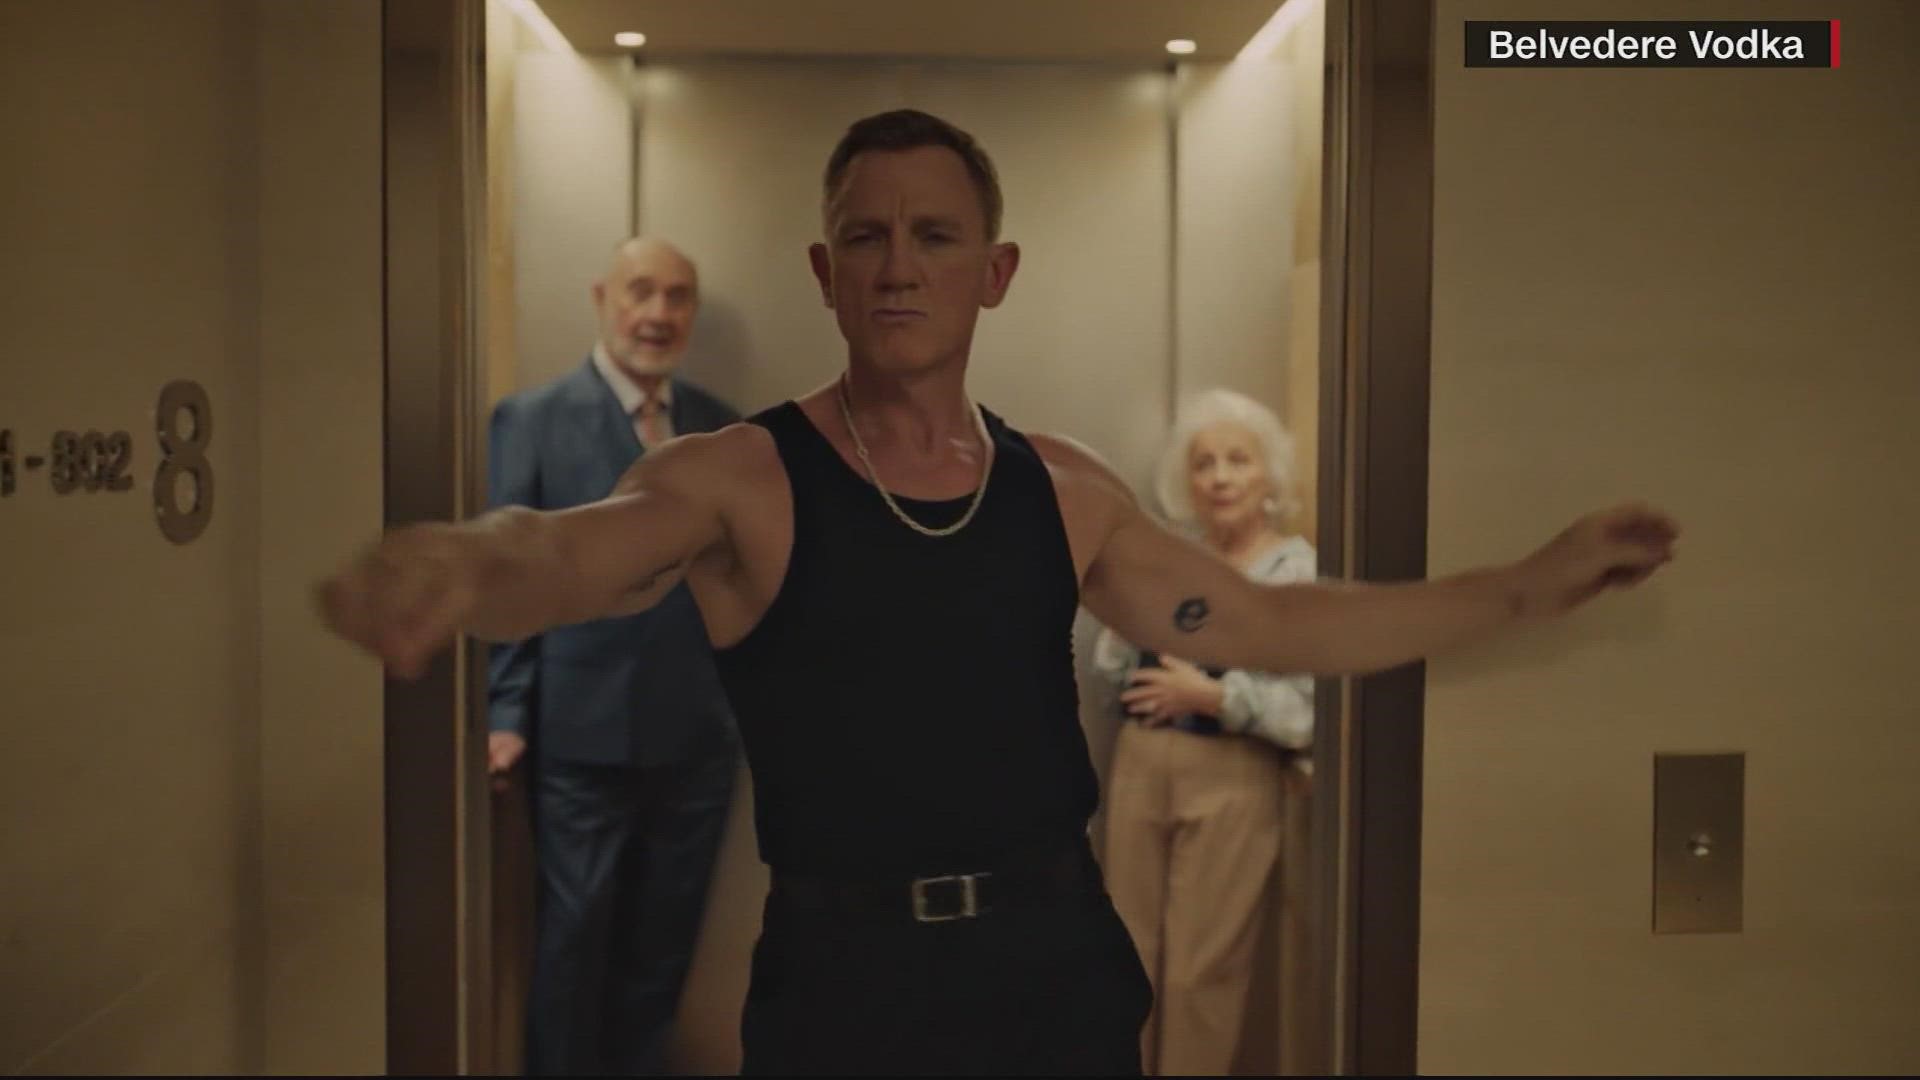 Daniel Craig dances in Belvedere Vodka's new ad